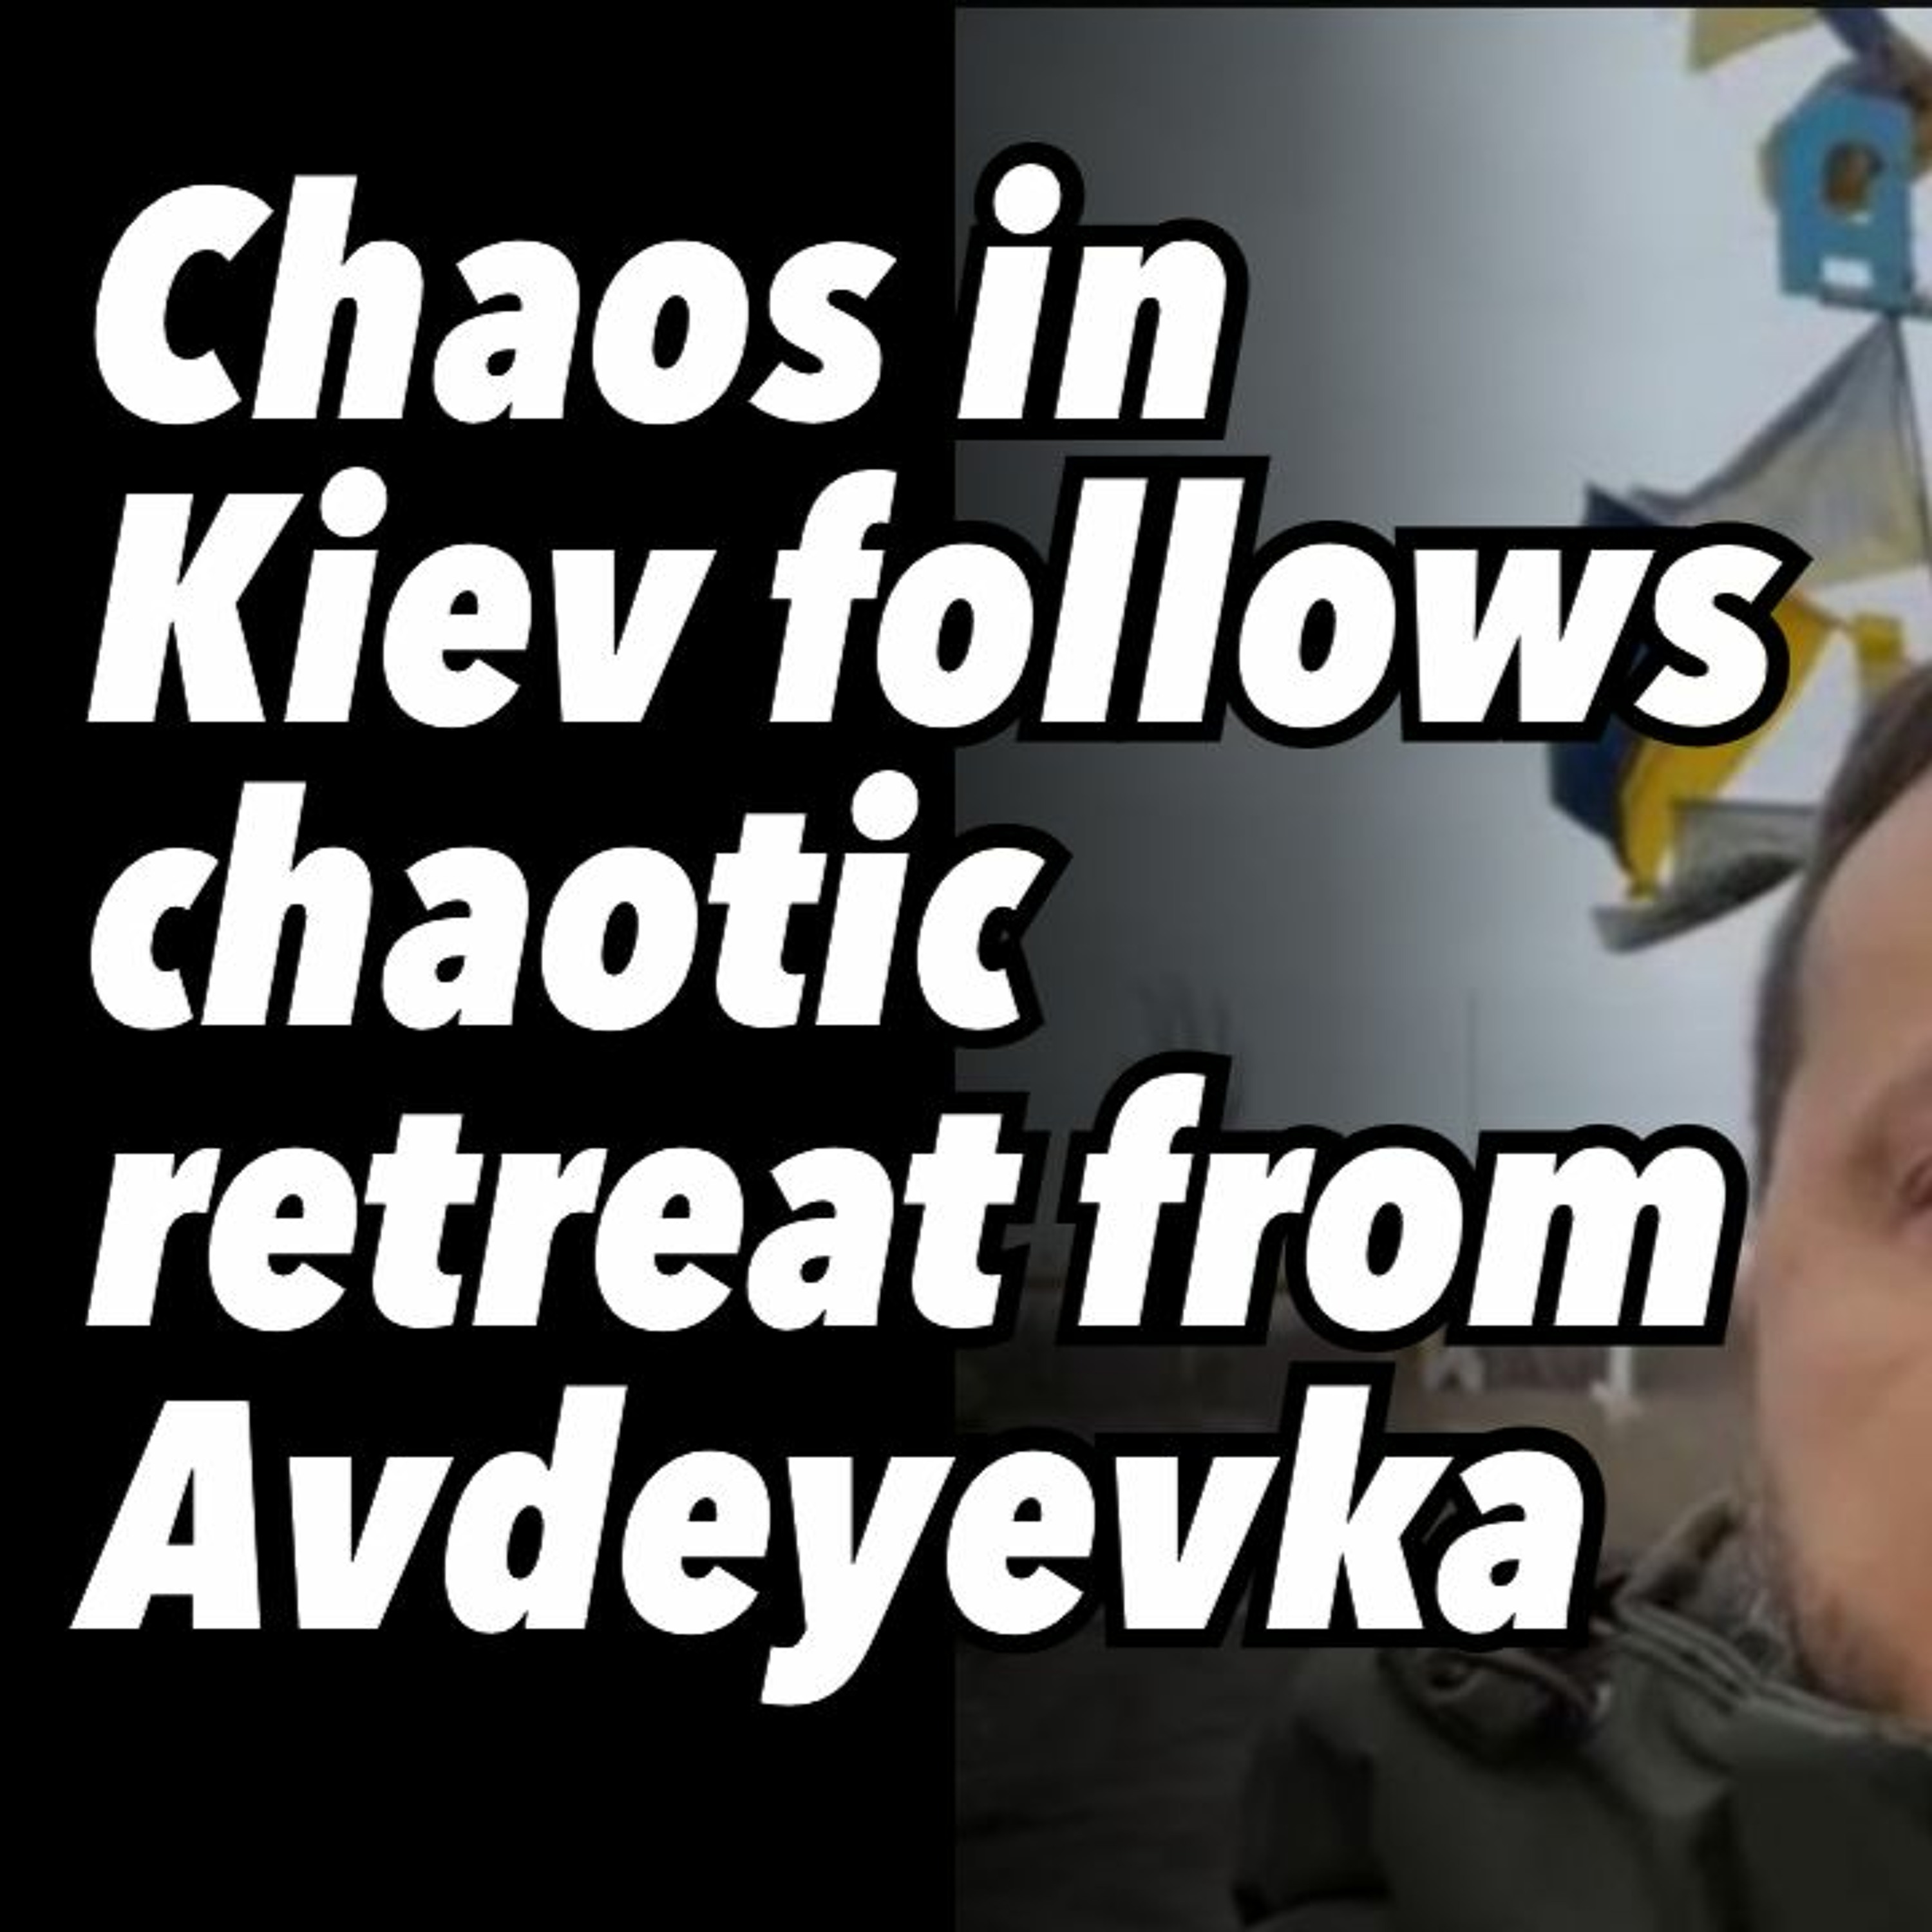 Chaos in Kiev follows chaotic retreat from Avdeyevka